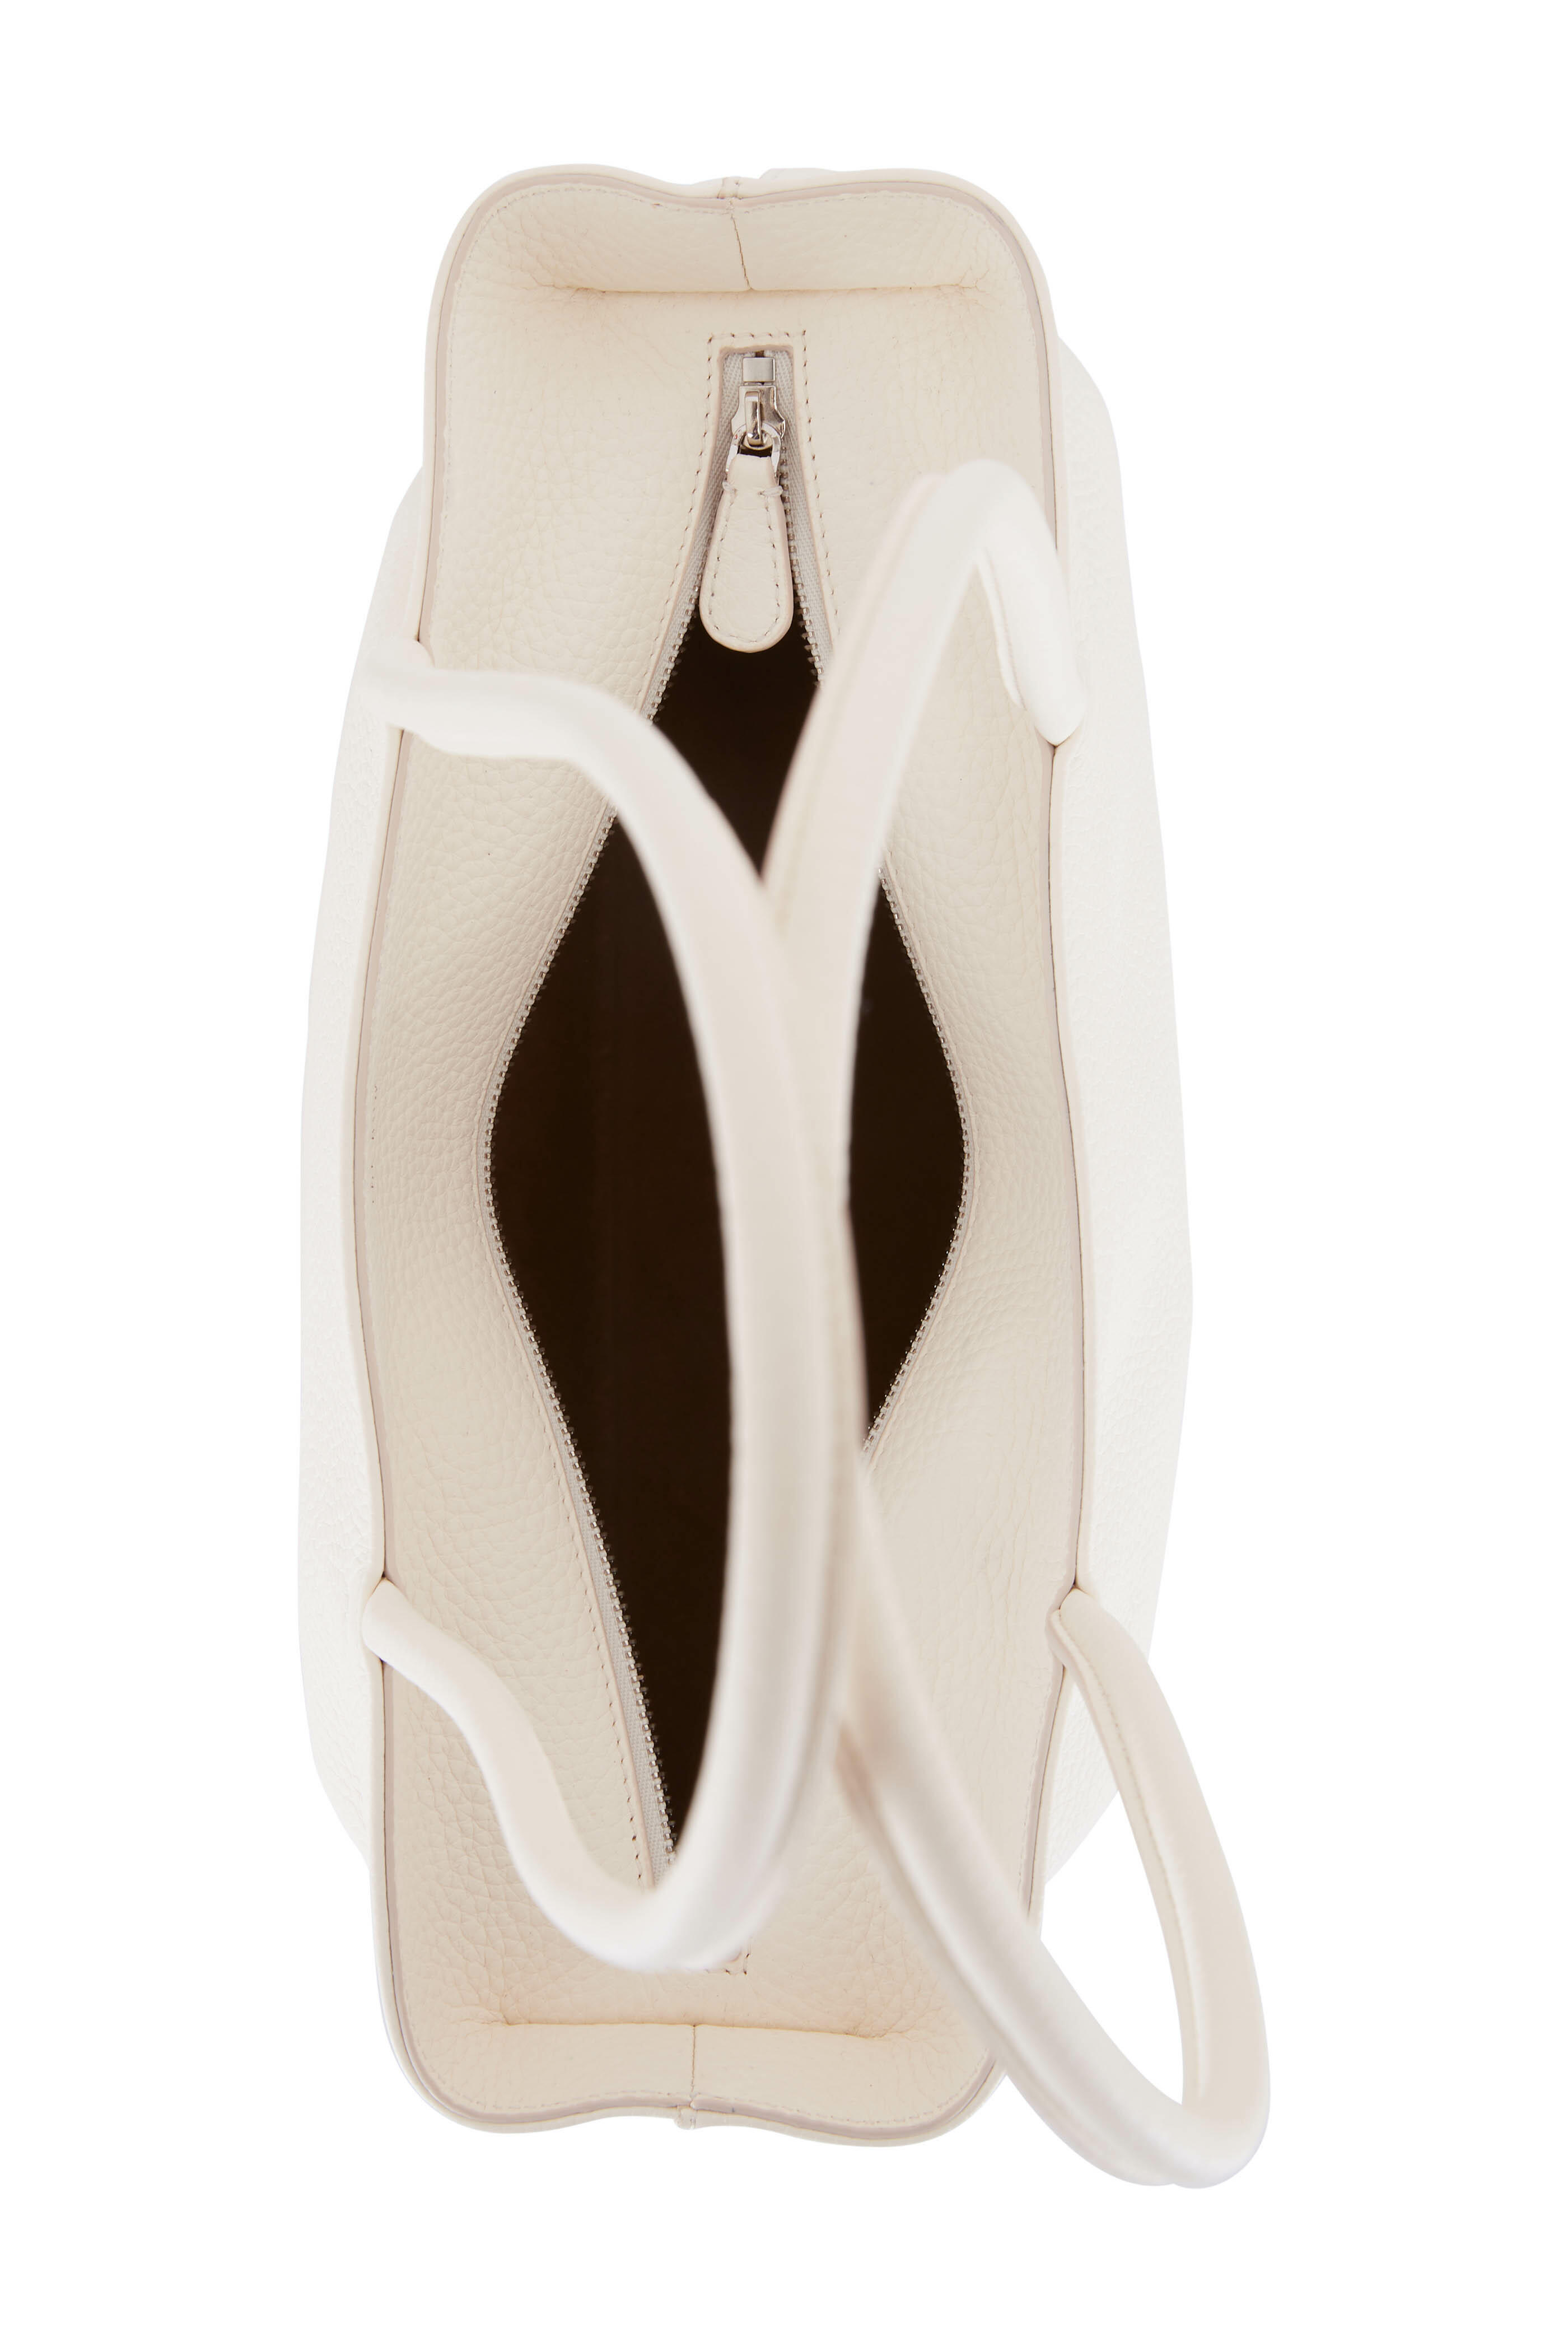 The Row Portfolio Medium Leather Shoulder Bag in White